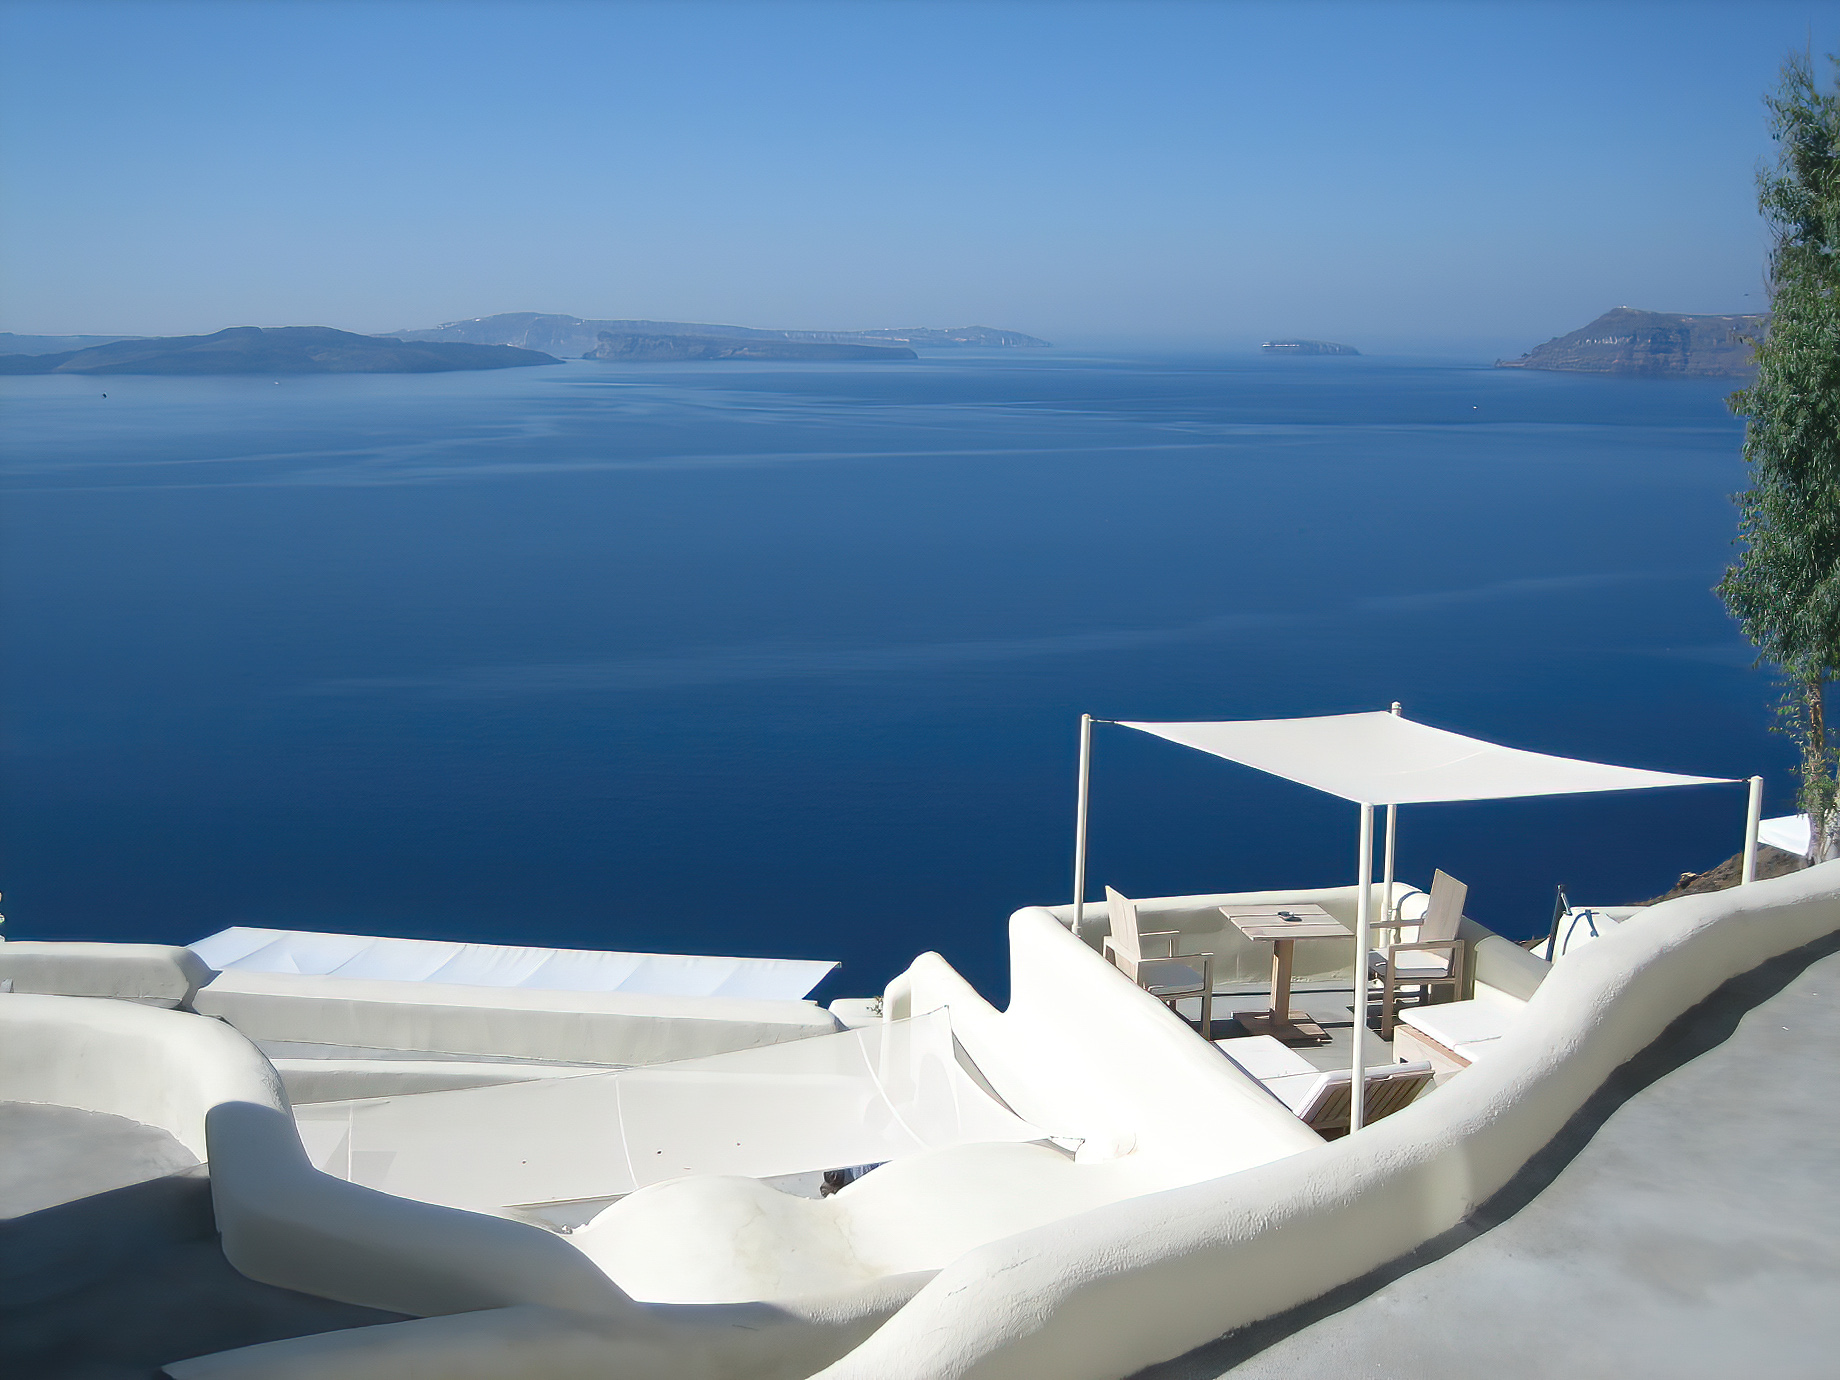 Mystique Hotel Santorini – Oia, Santorini Island, Greece – Mystique Ocean View Deck